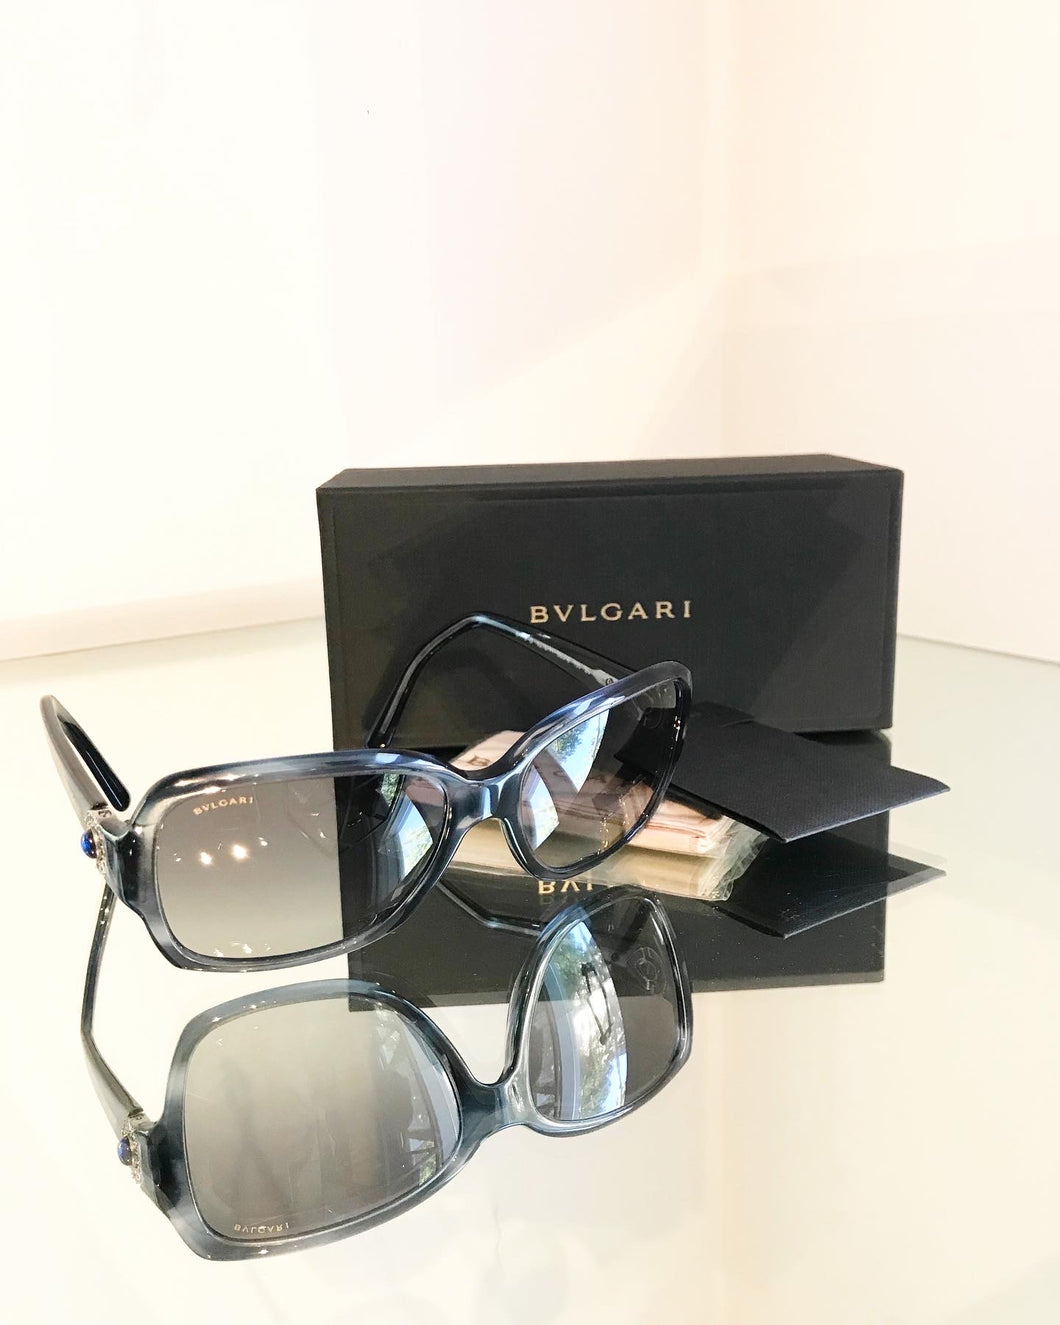 BVLGARI Crystal Embellished Sunglasses